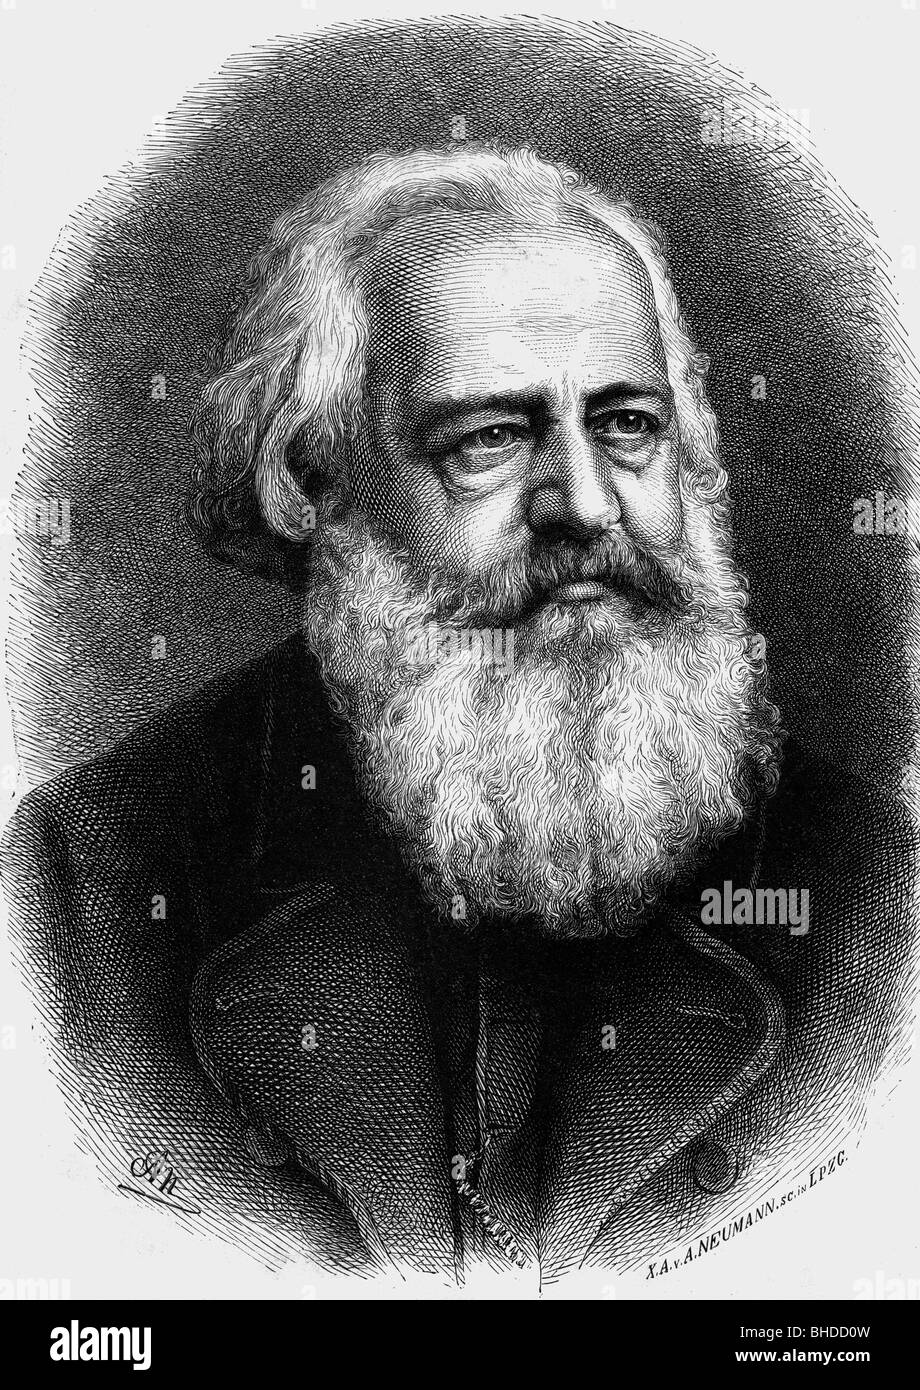 Benedix, Roderich, 21.1.1811 - 26.9.1873, German actor, author / writer, portrait, wood engraving by Adolf Neumann (1825 - 1884), Stock Photo